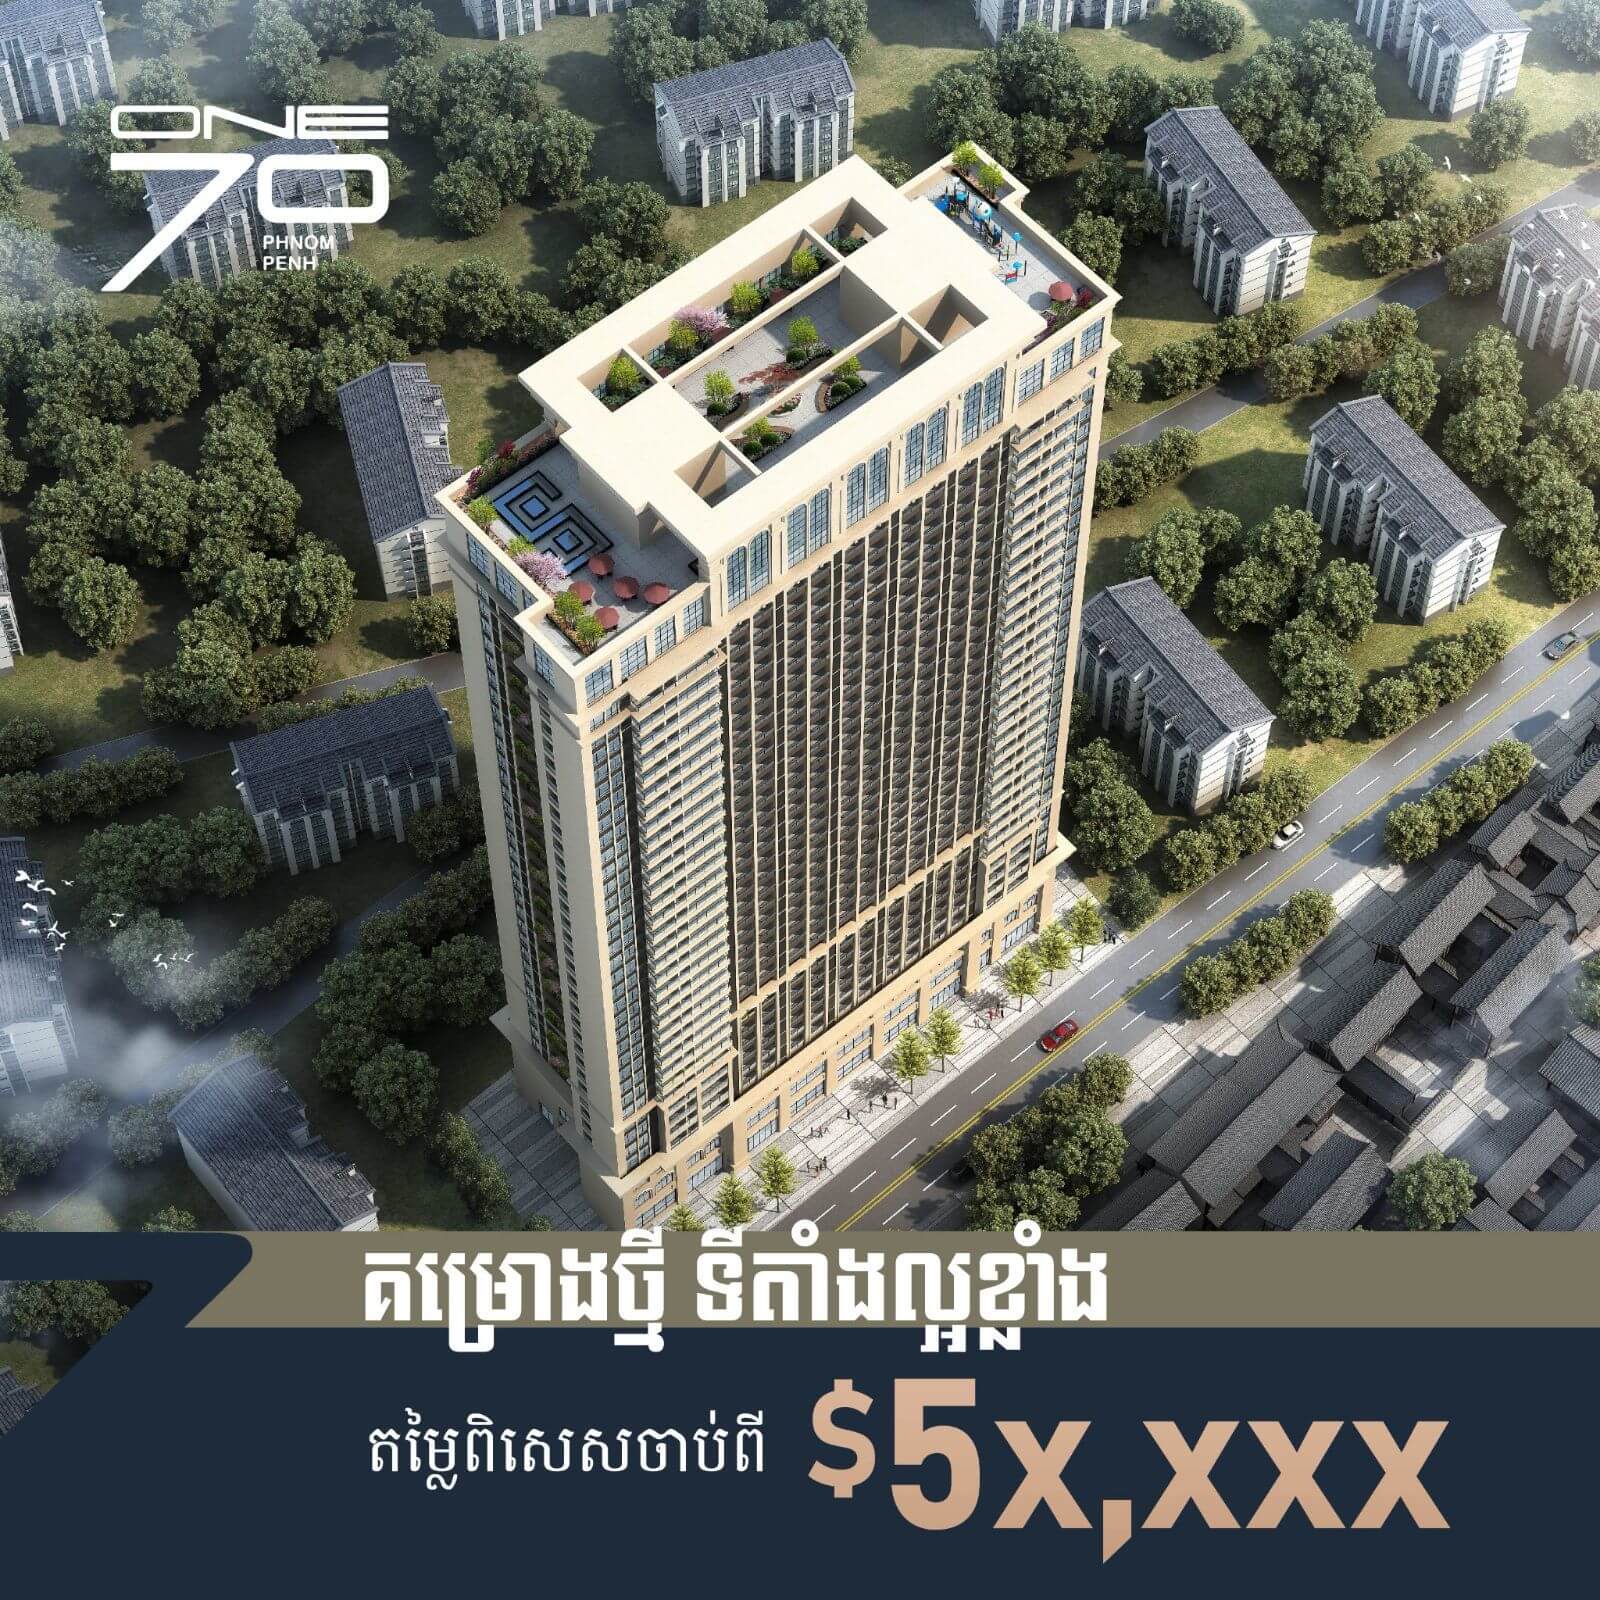 Phnom Penh Property 45% Discount